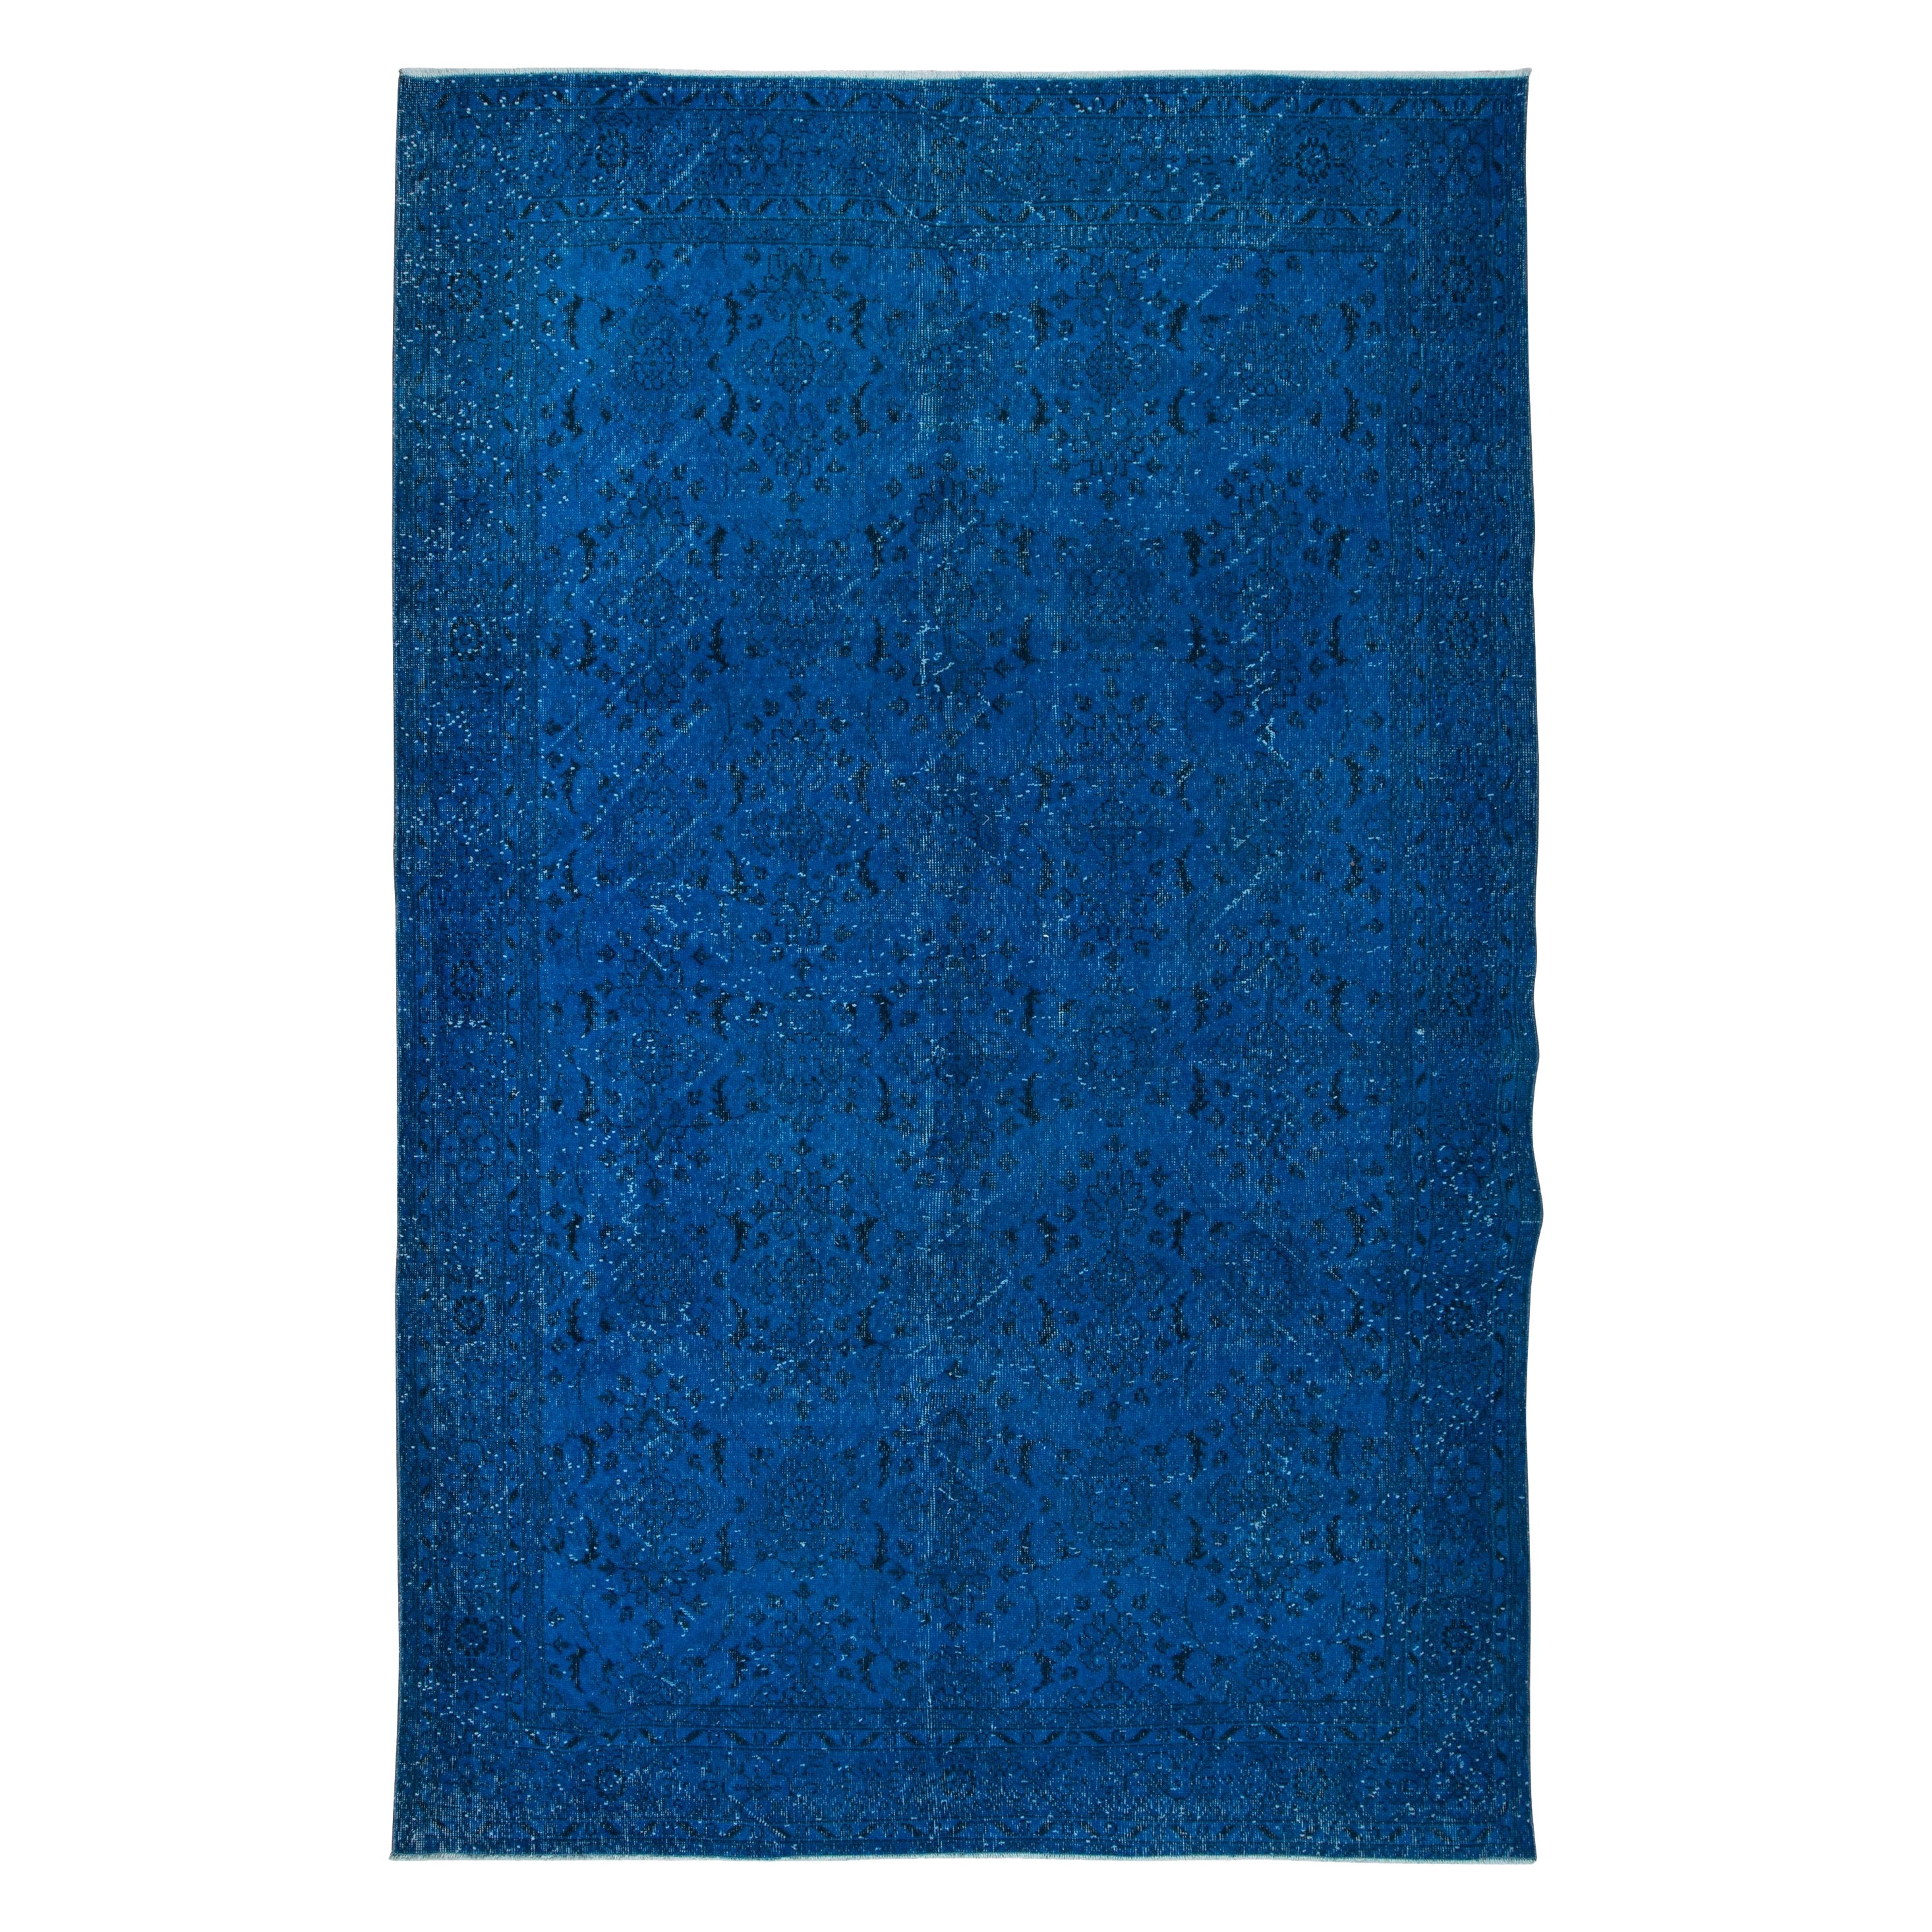 6.6x10.2 Ft Modern Blue Handmade Area Rug, Turkish Carpet, Woolen Floor Covering